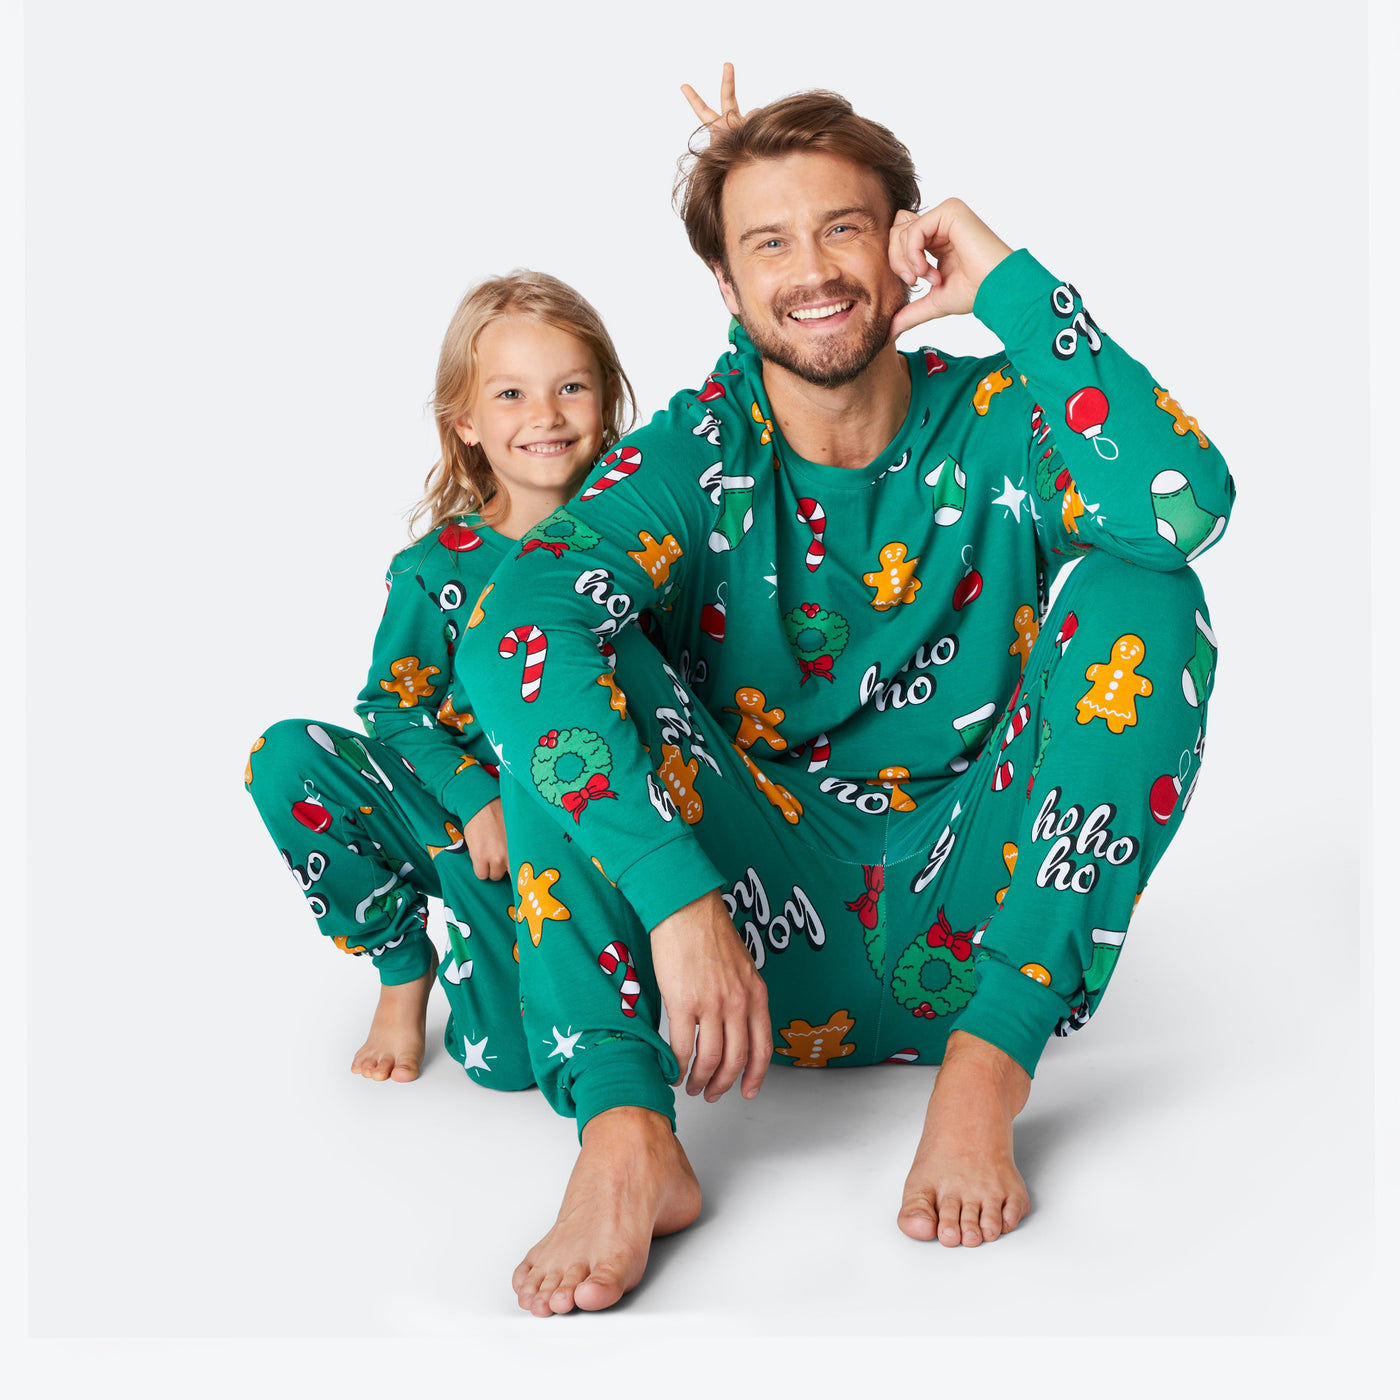 Grüner Hohoho Weihnachtspyjama Kinder